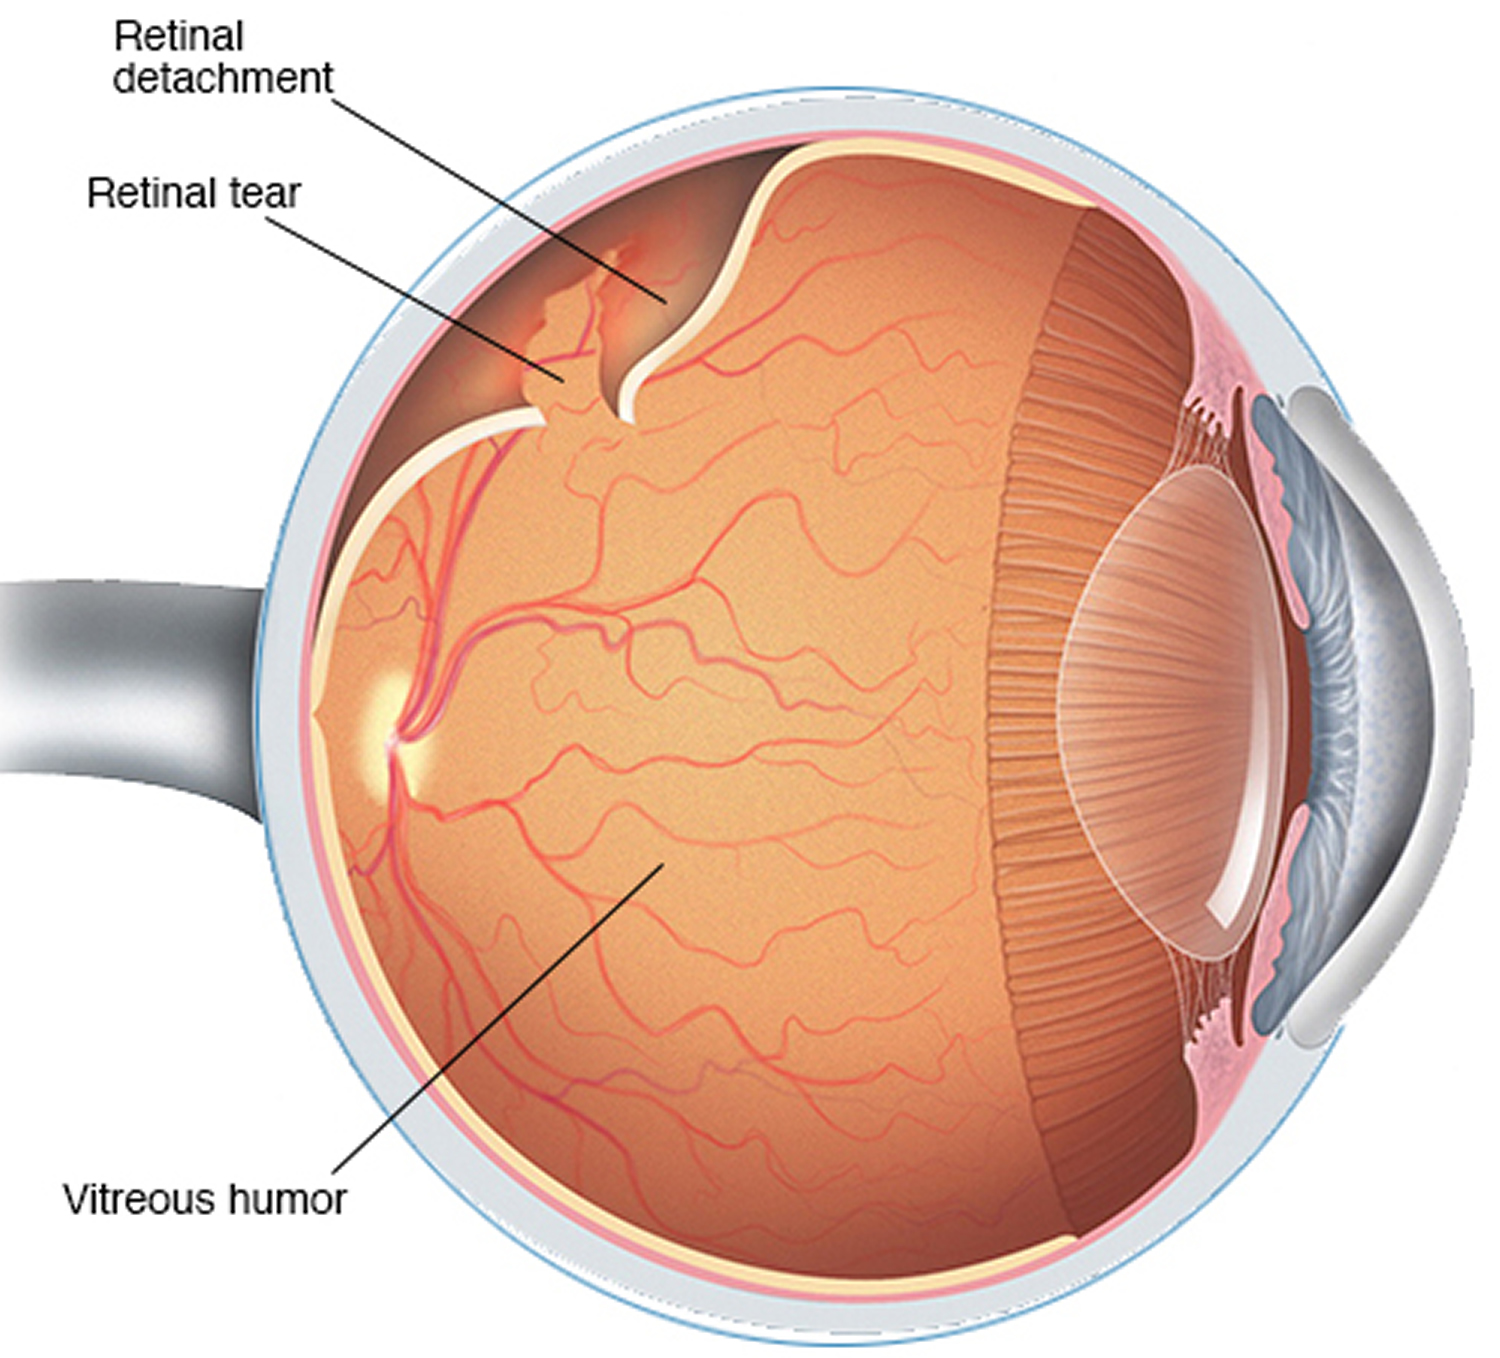 retina detachment surgery with keratoconus